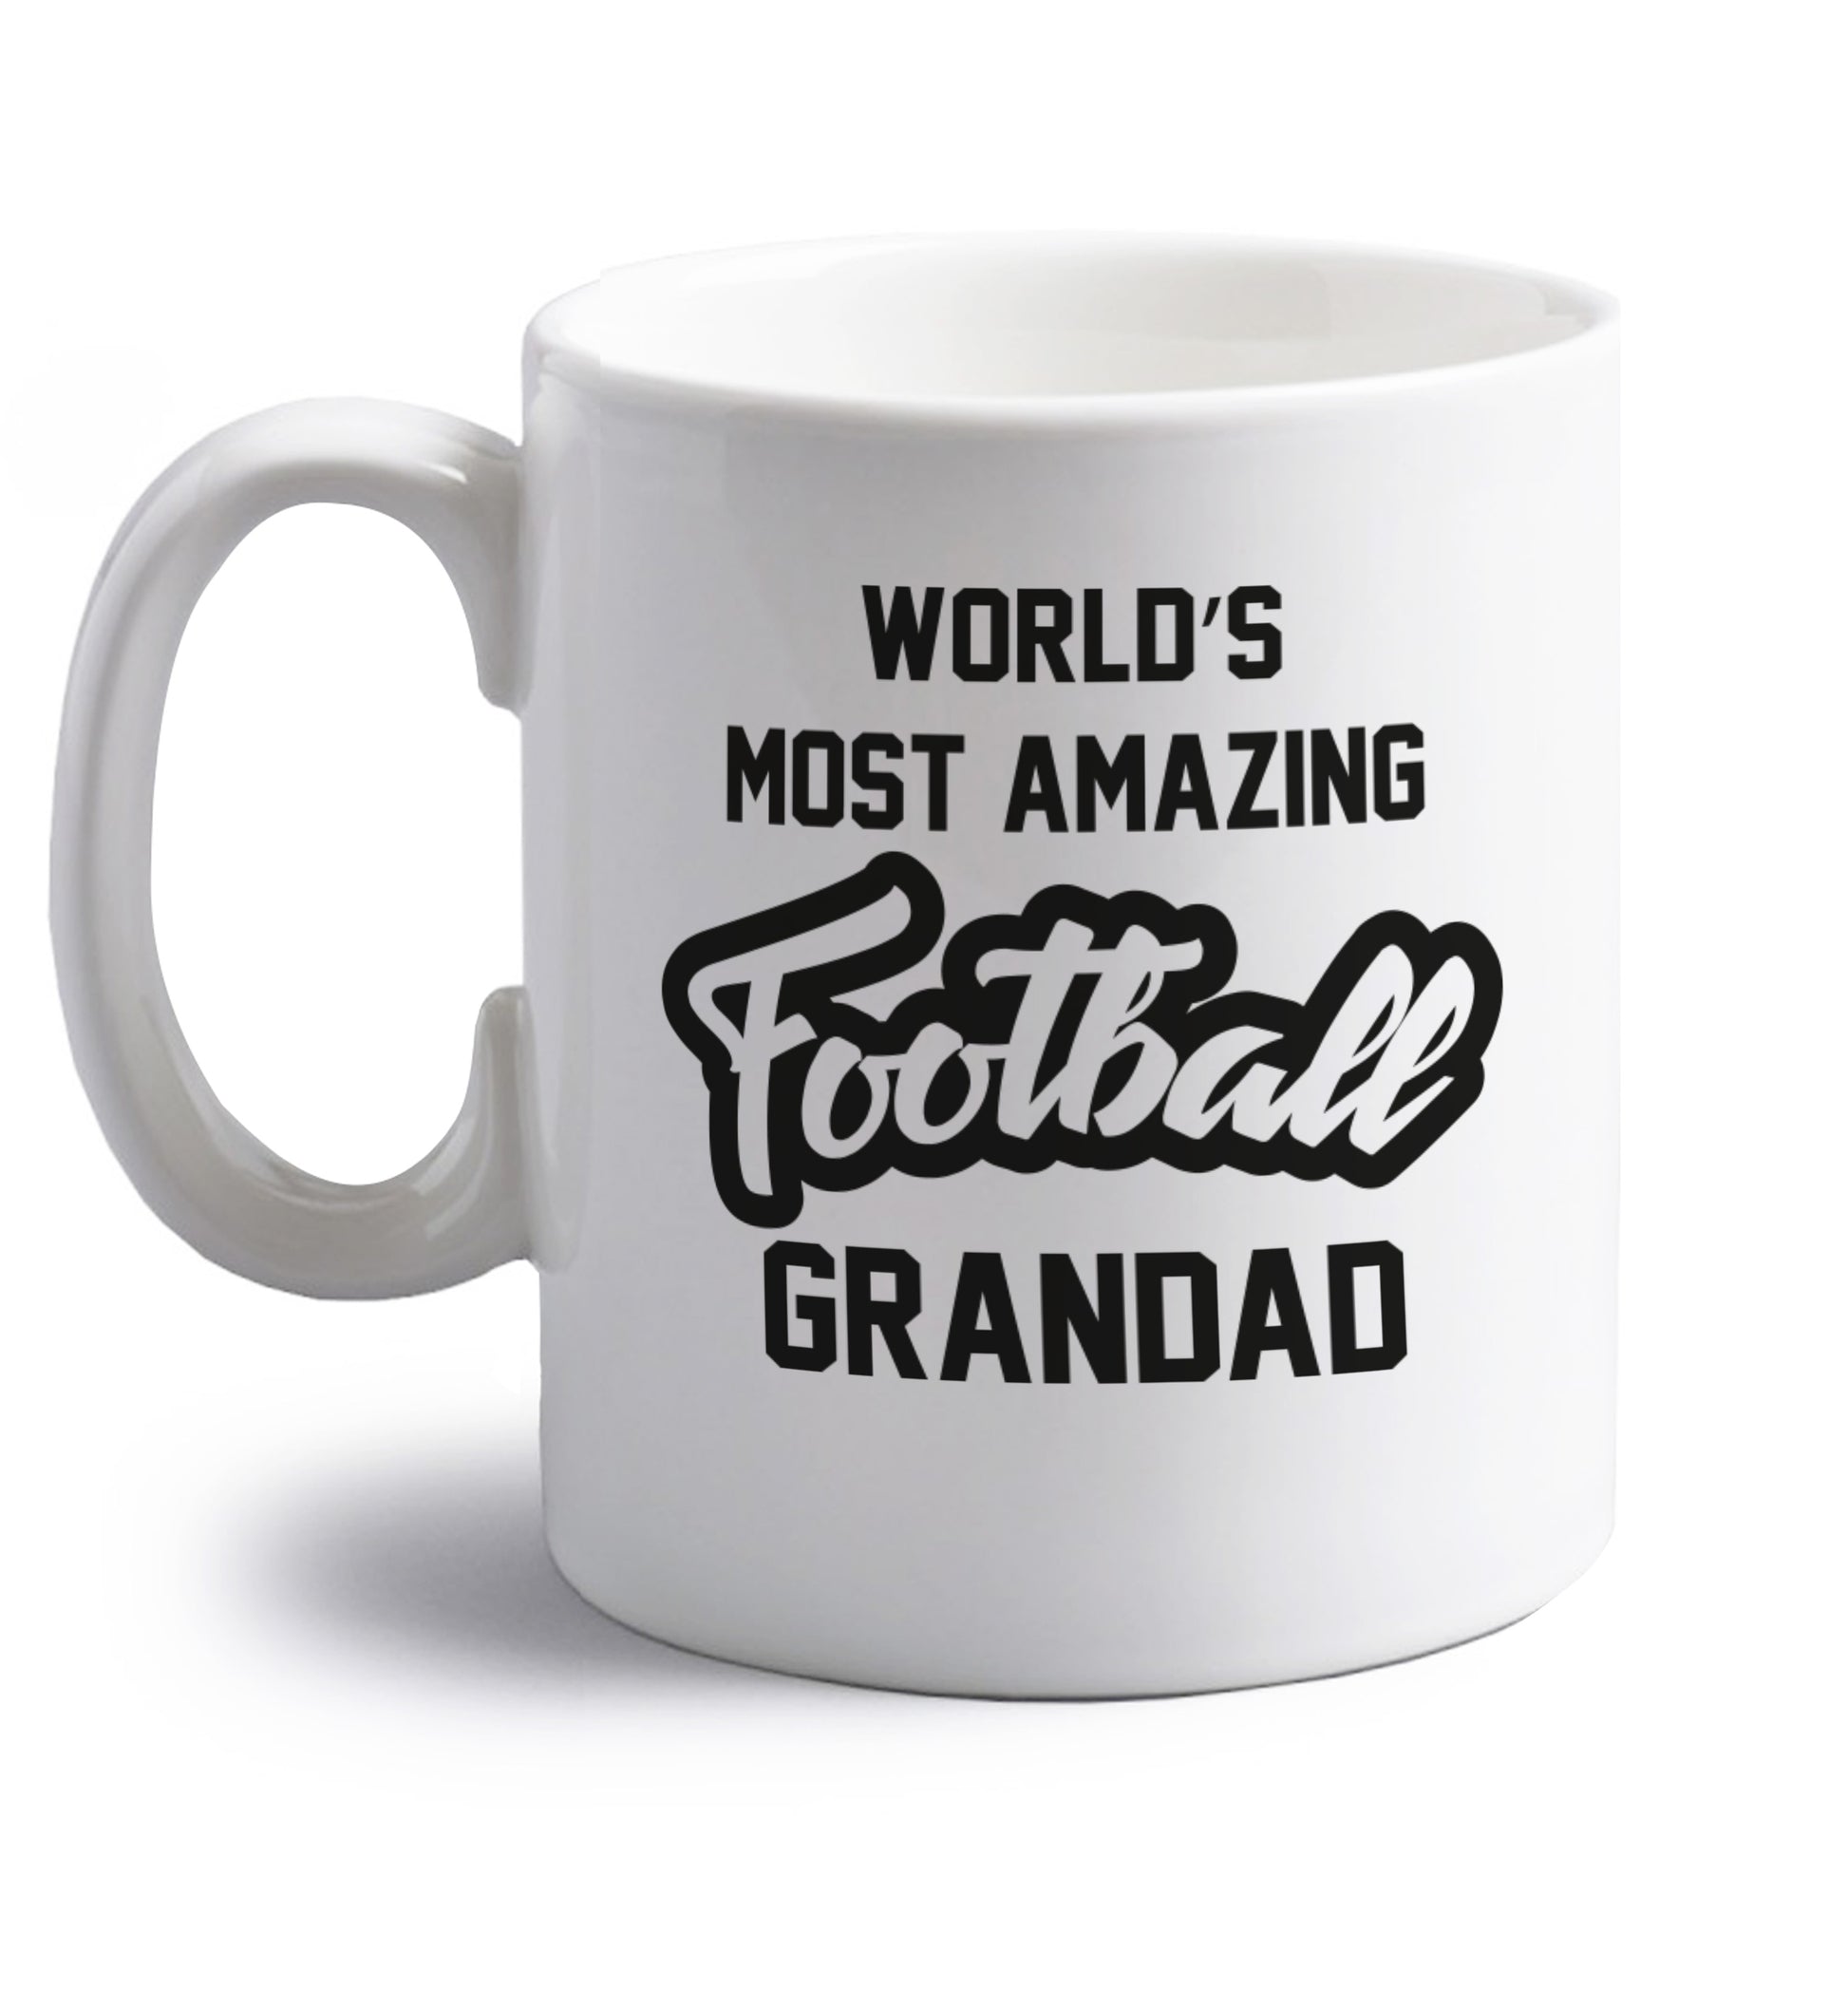 Worlds most amazing football grandad right handed white ceramic mug 